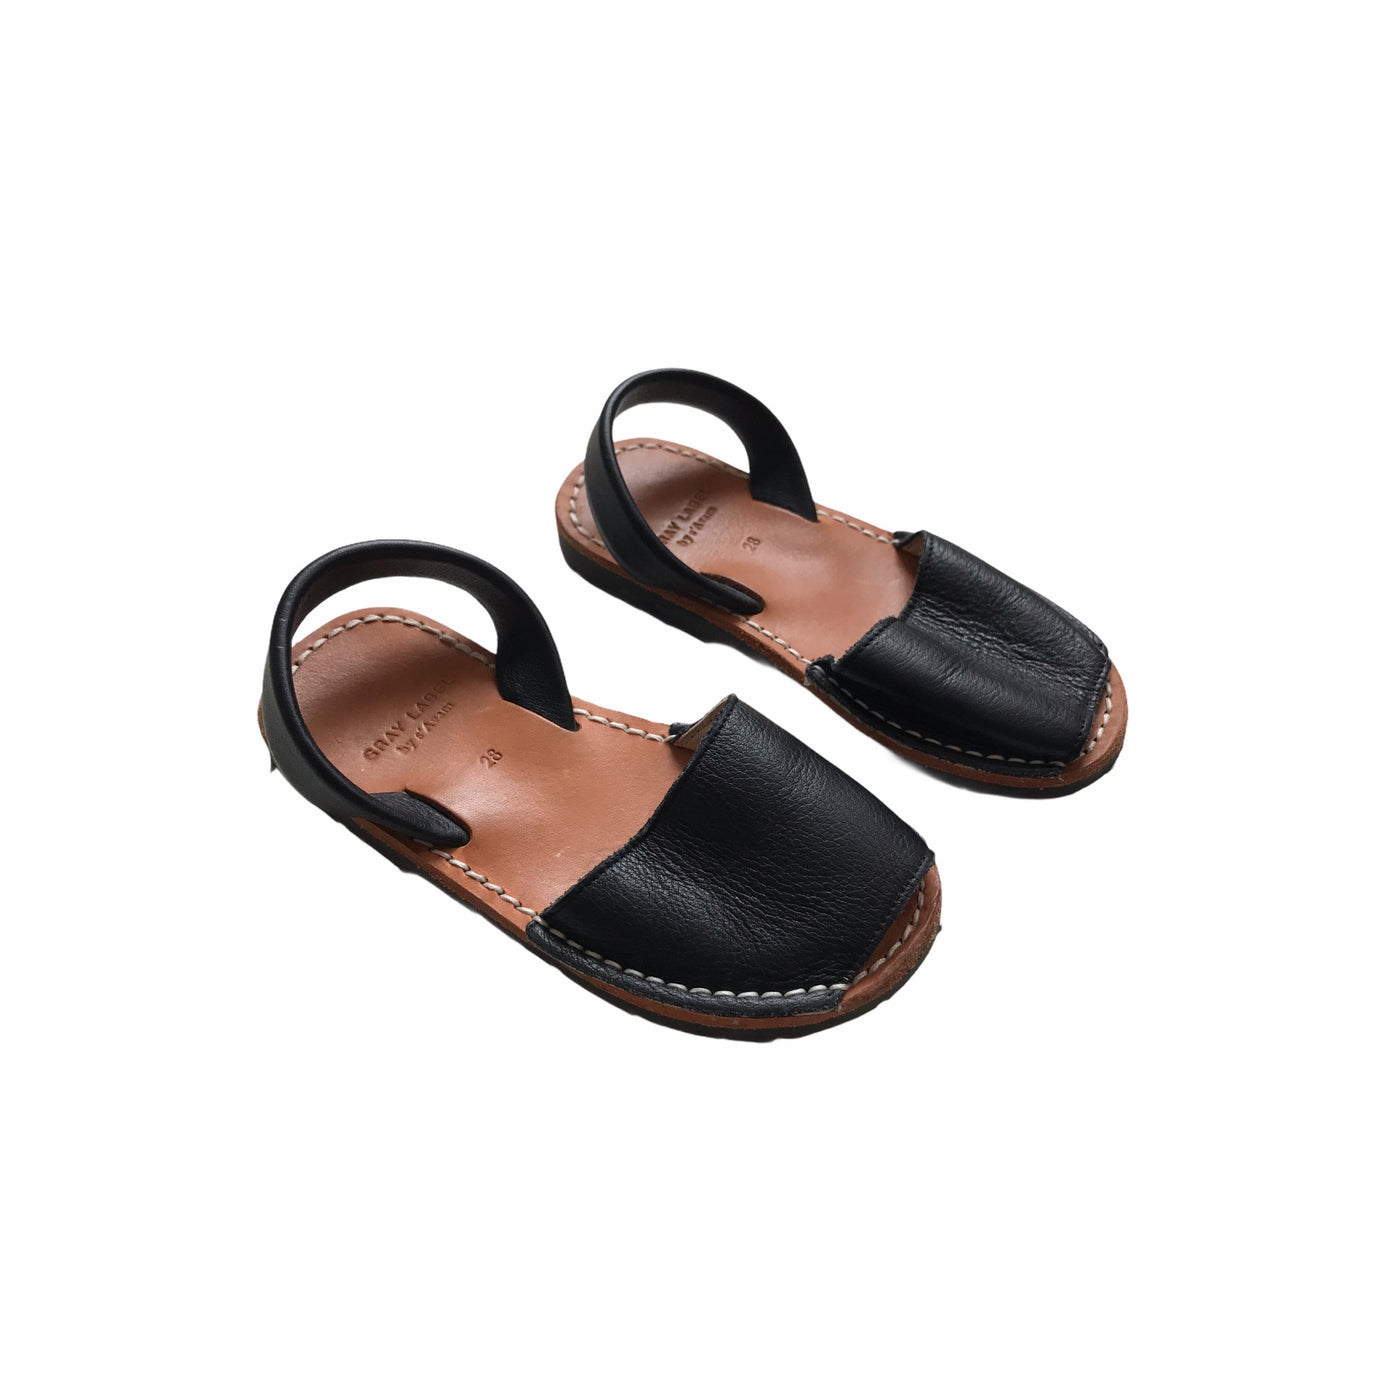 Gray Label sandals size 28